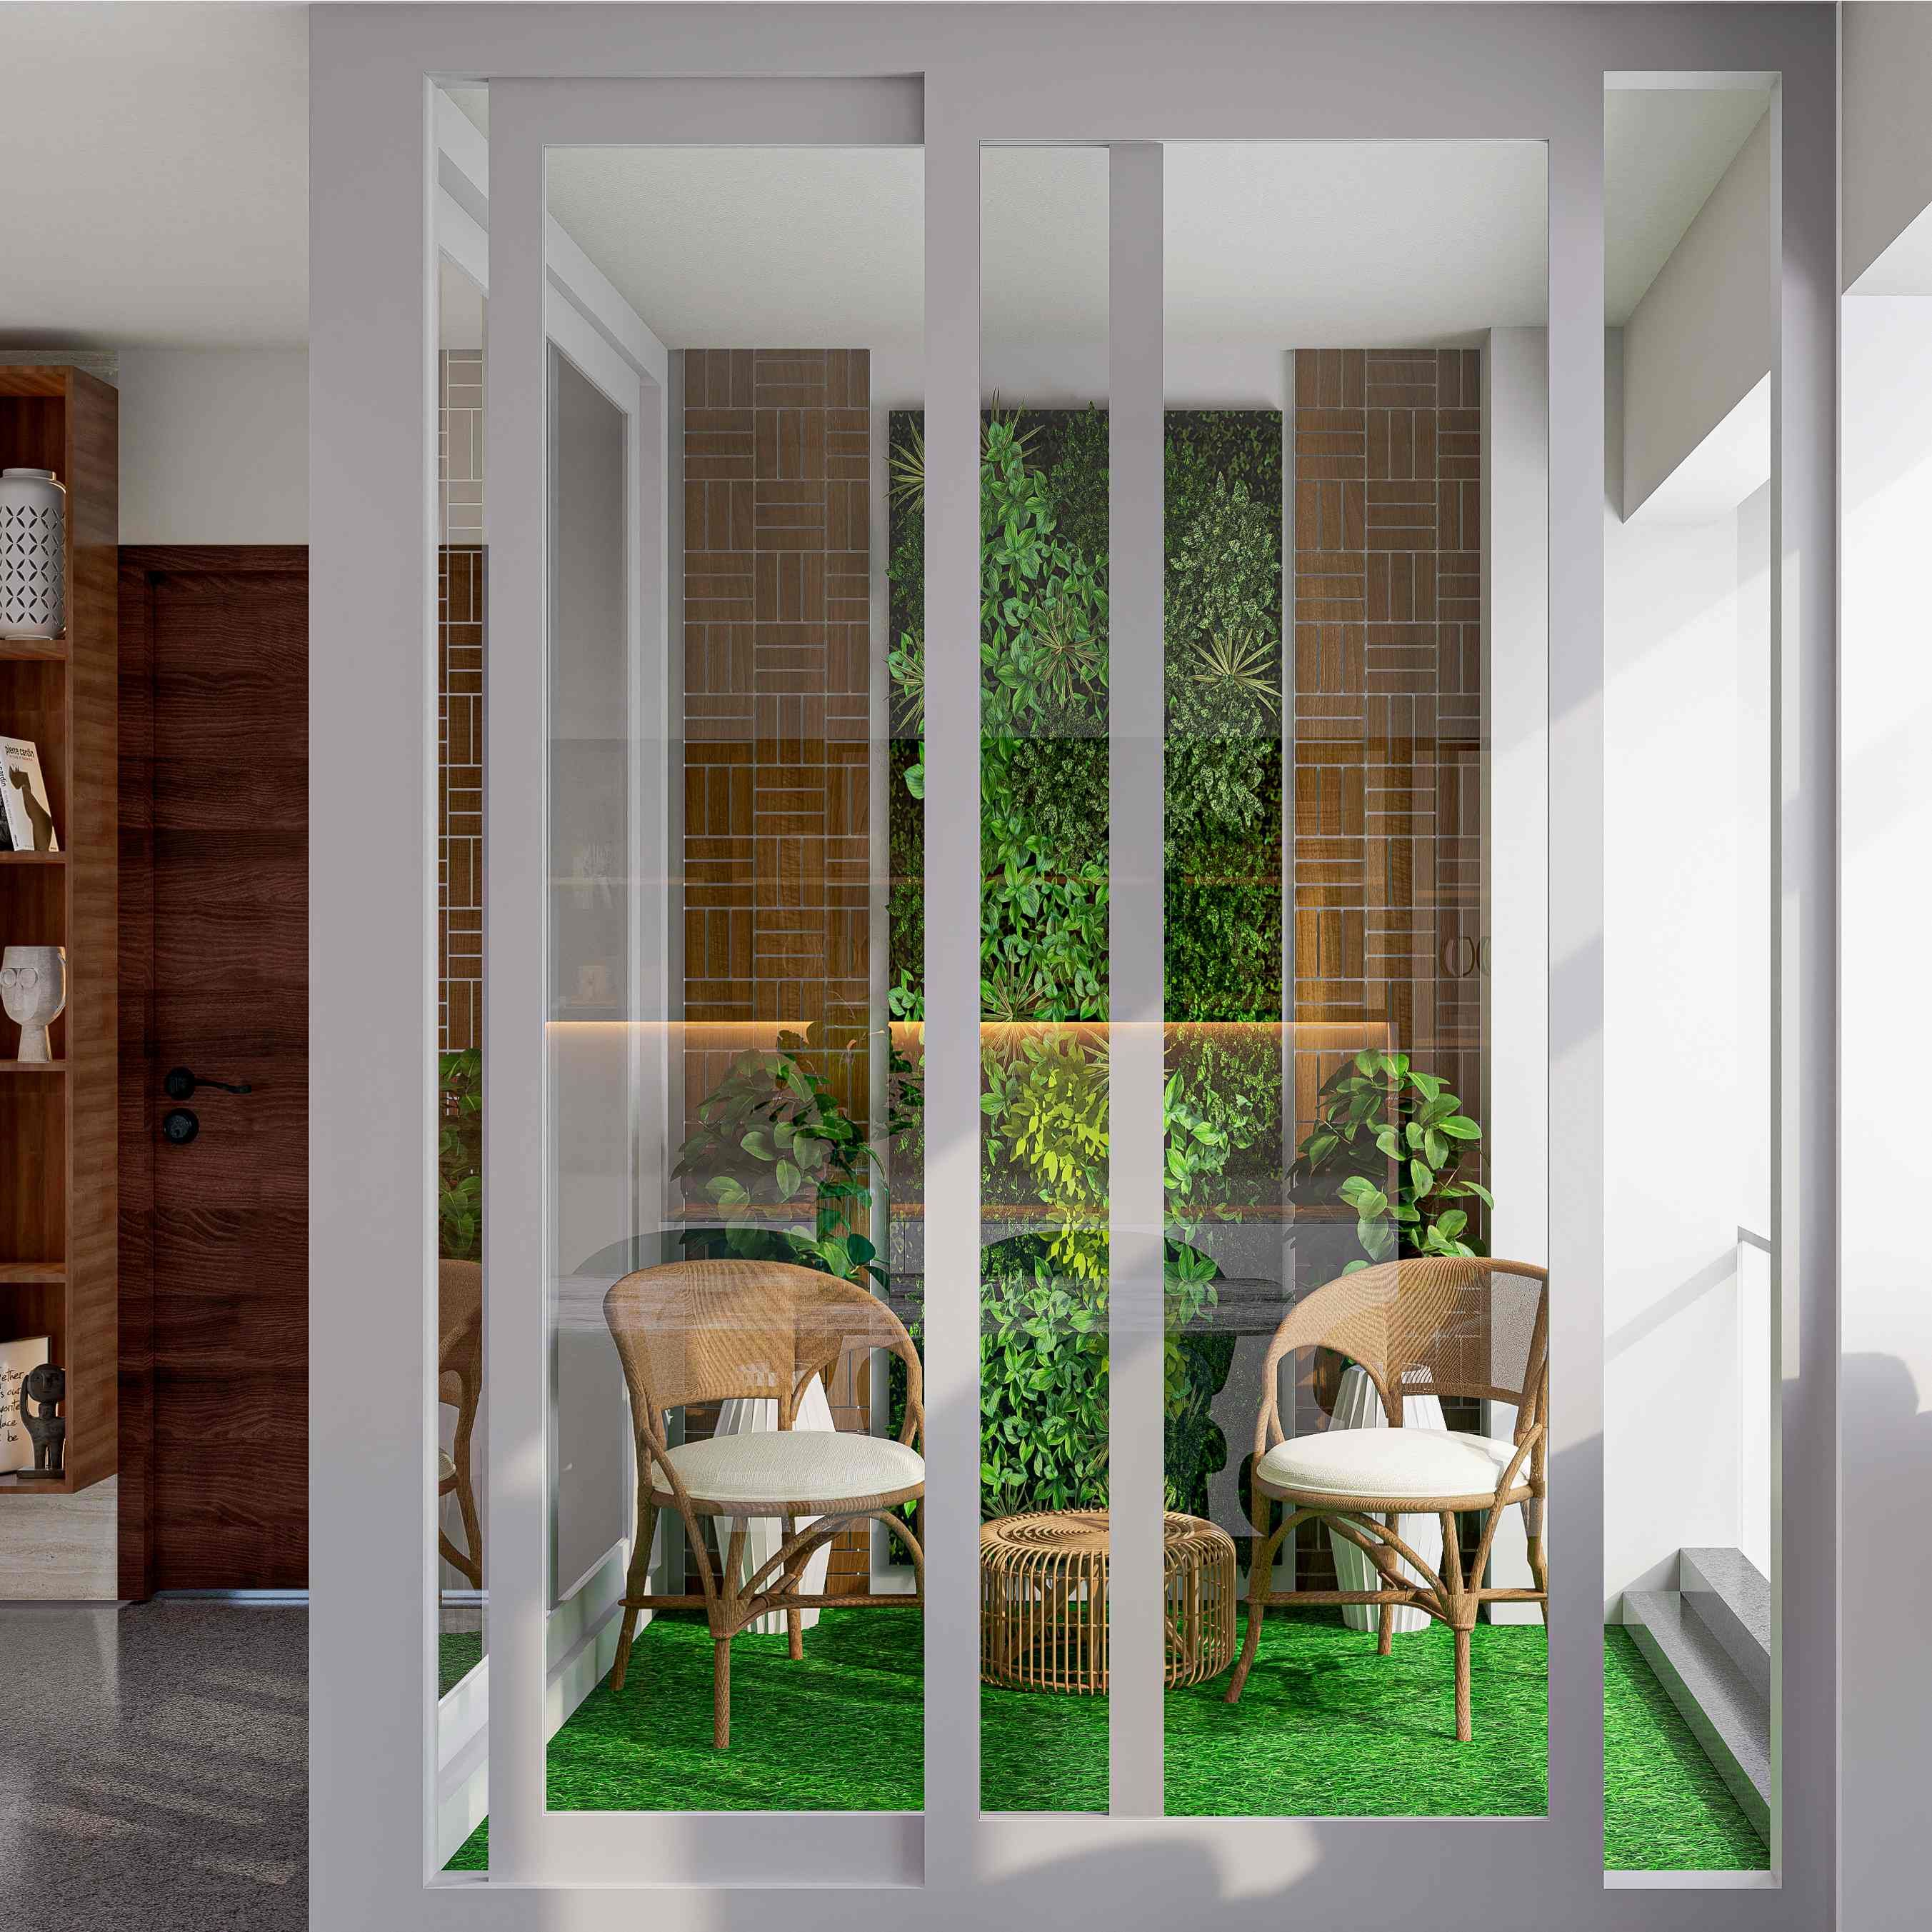 Modern Balcony Design With Vertical Garden